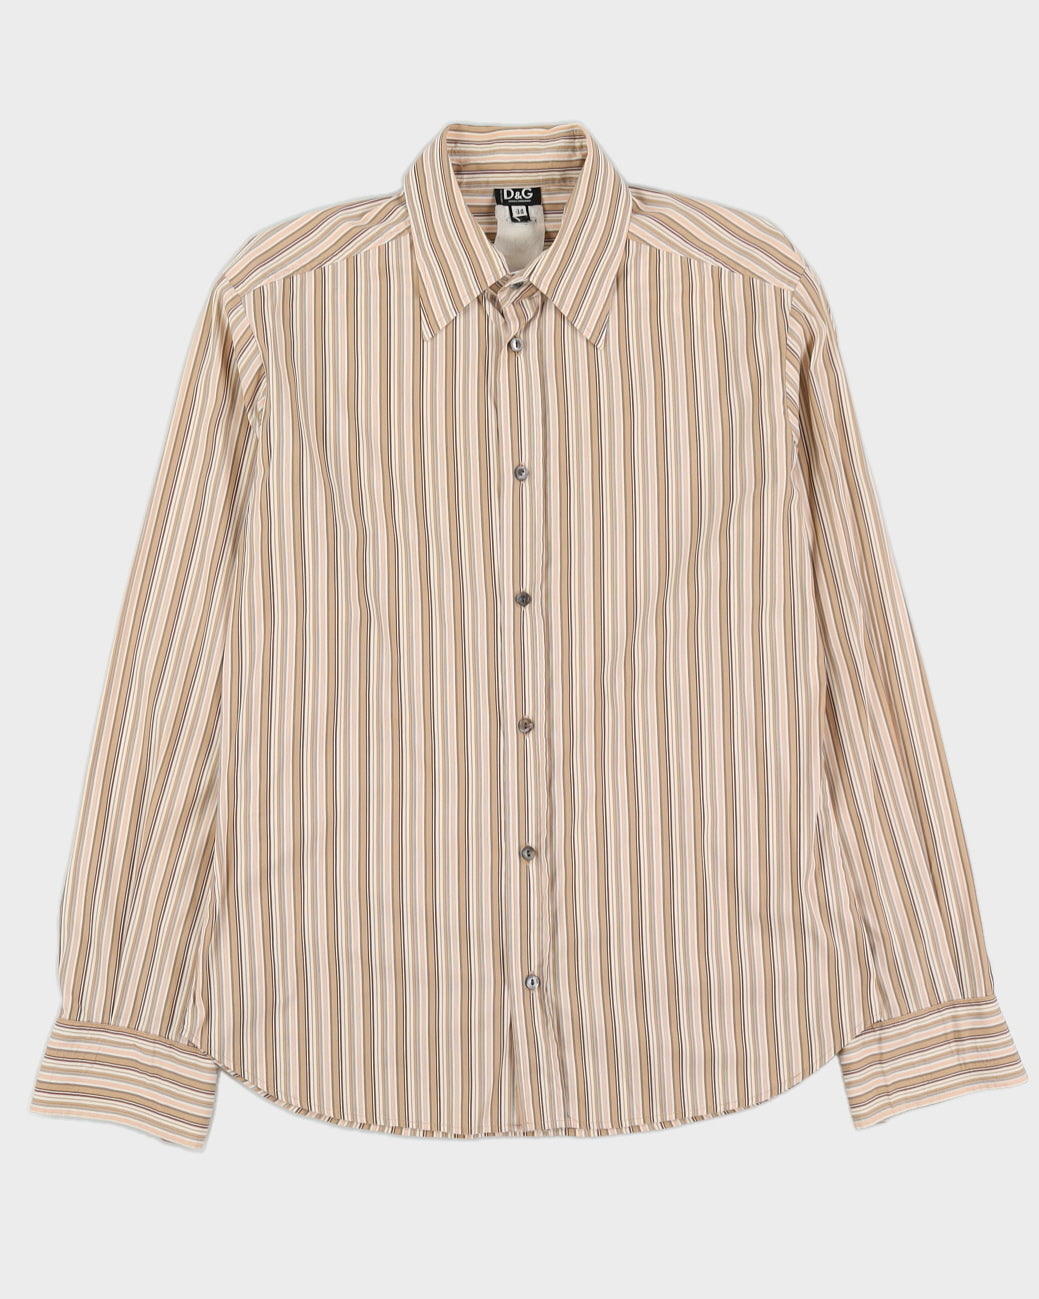 Dolce & Gabbana Beige Striped Shirt - XL